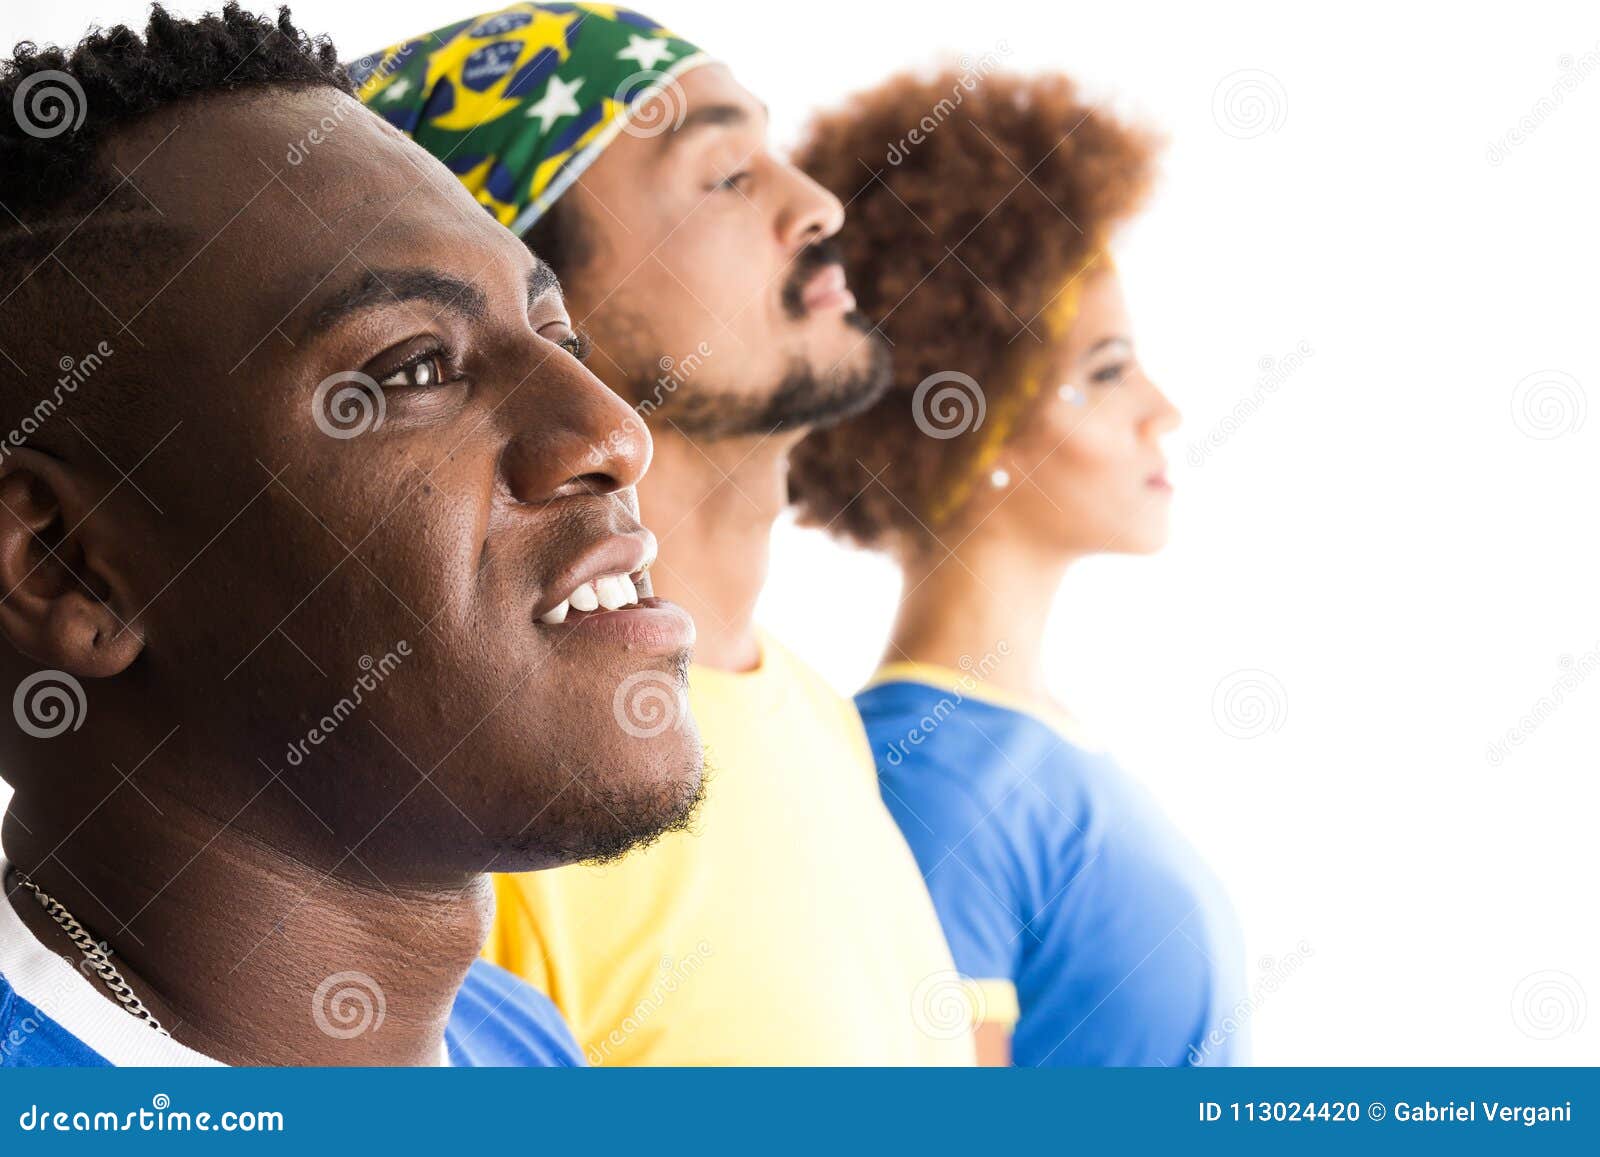 brazilian group of fans celebrating on football match on white b